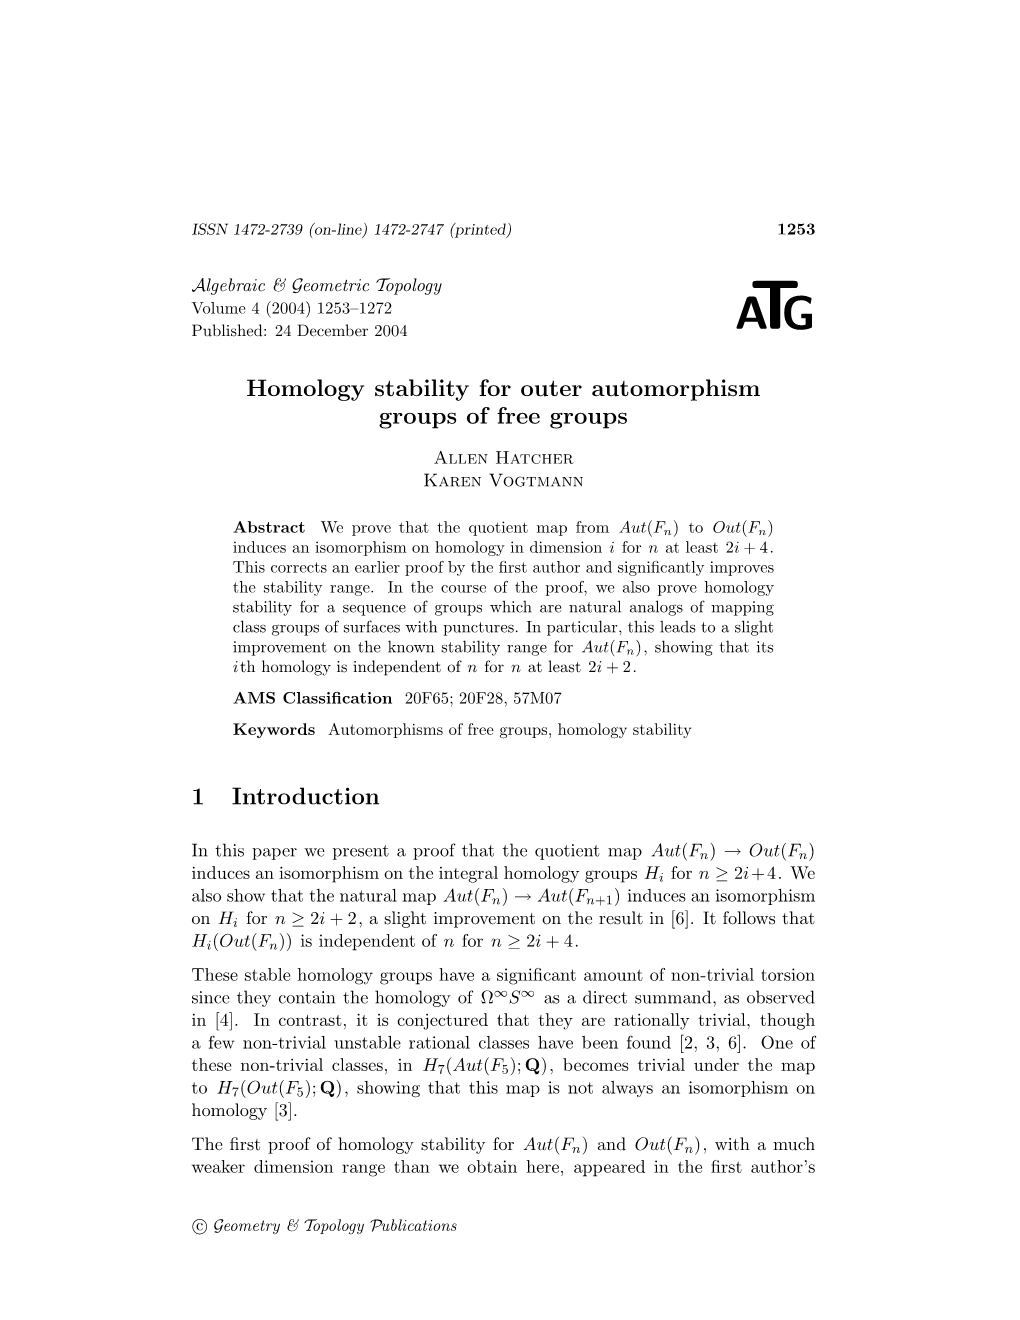 Homology Stability for Outer Automorphism Groups of Free Groups Allen Hatcher Karen Vogtmann